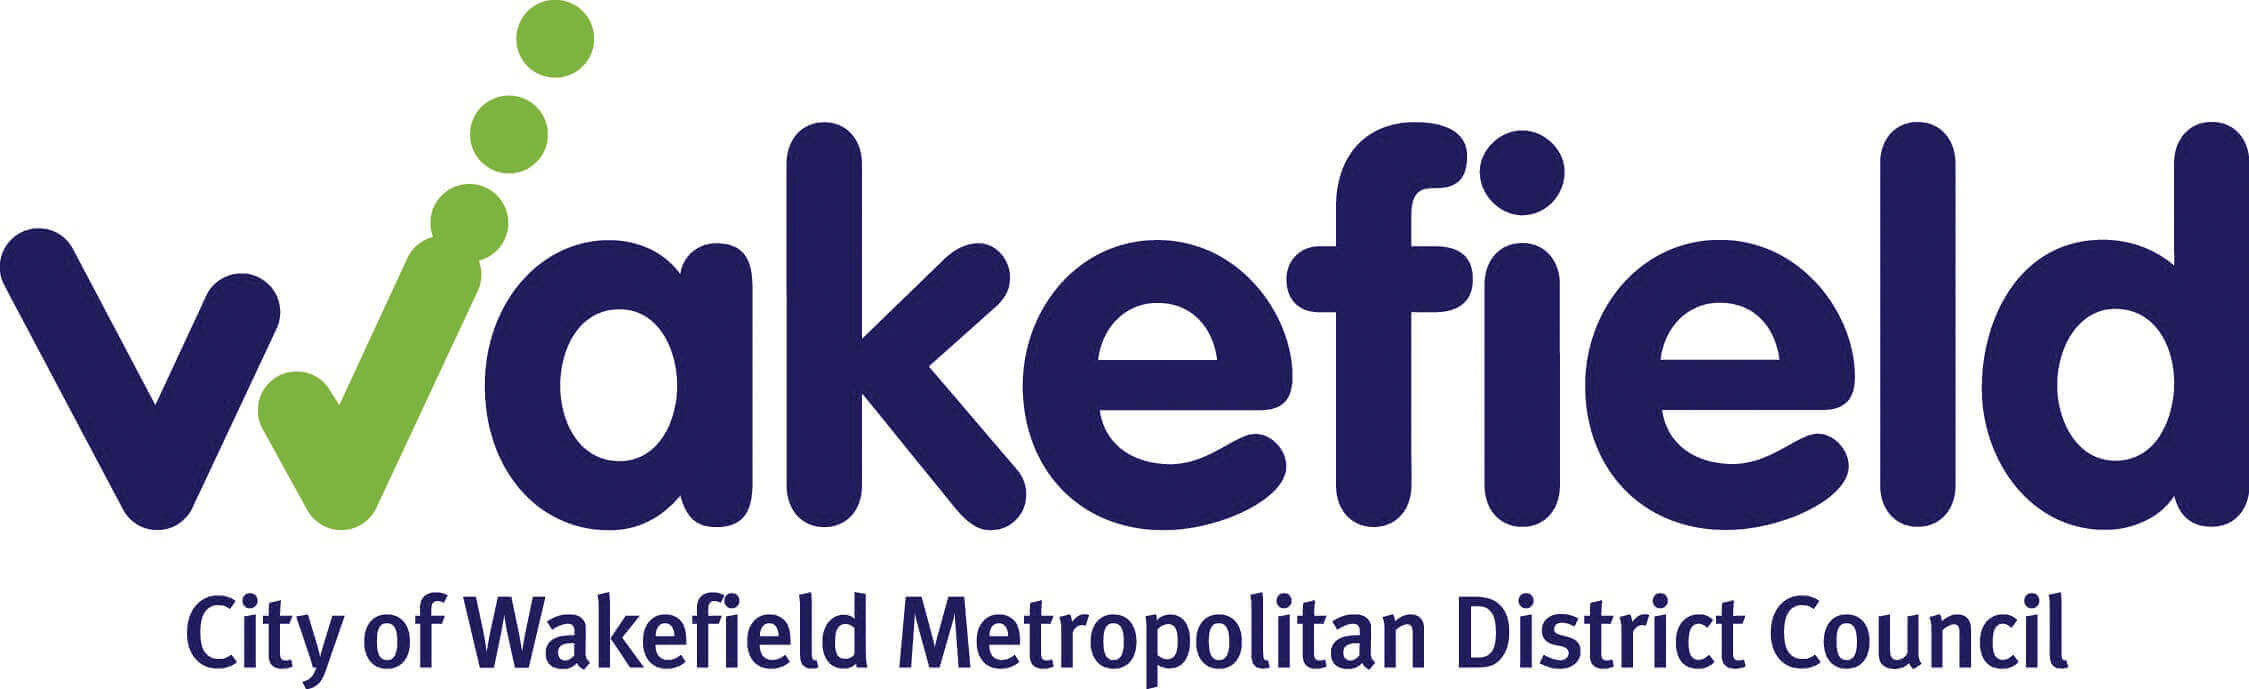 City of Wakefield Metropolitan District Council 